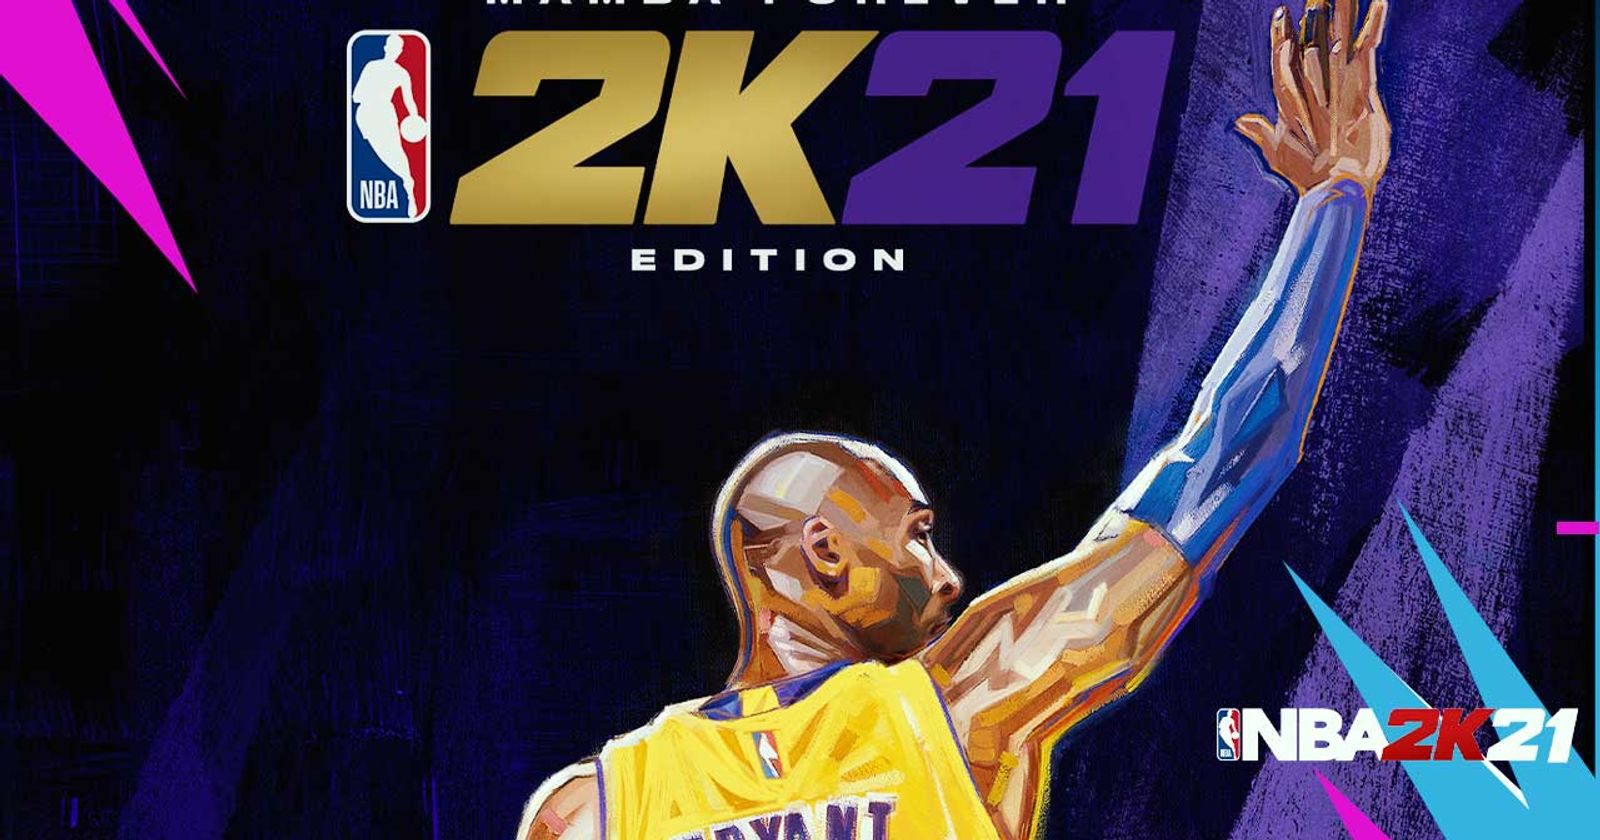 Kobe Bryant Mamba Forever #8 #24 Nike Lakers jersey